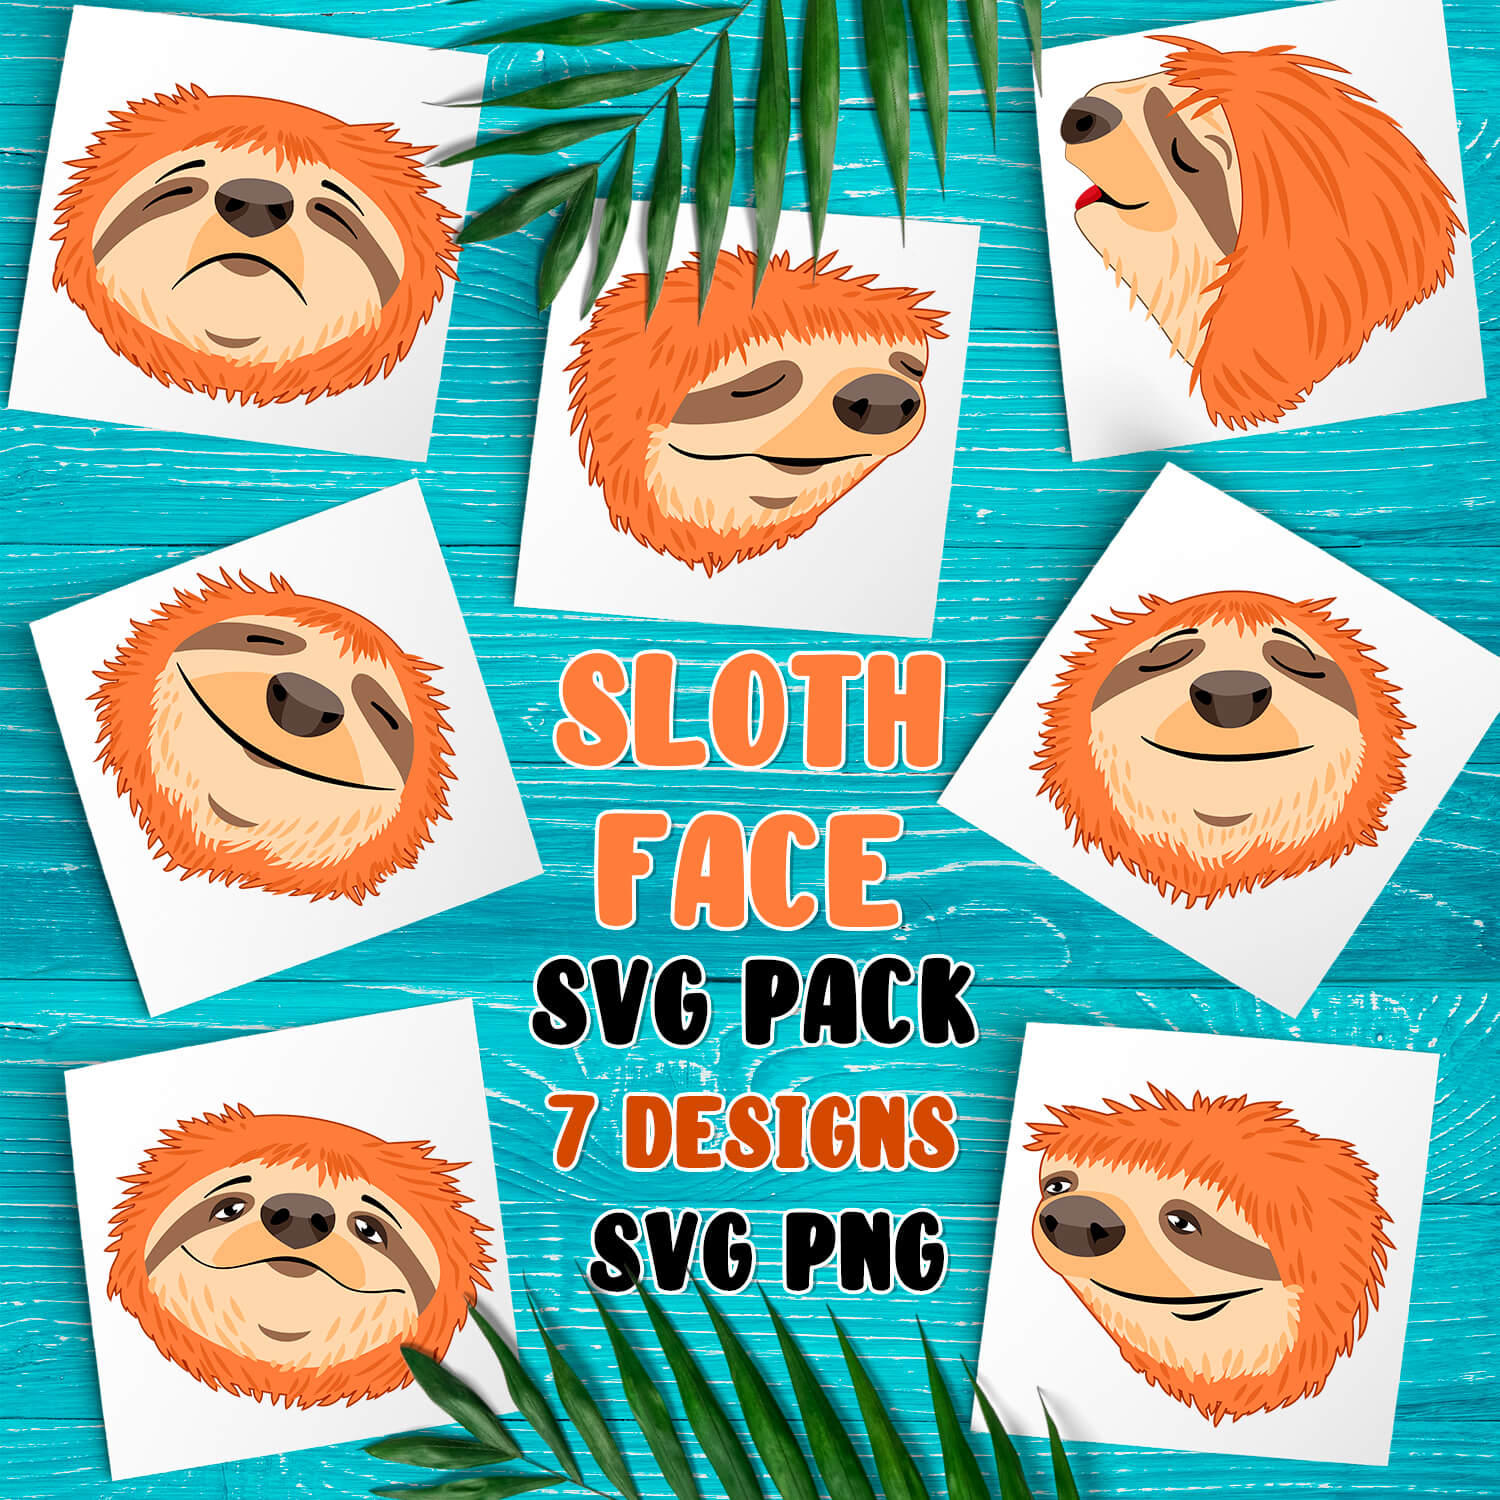 Sloth face svg pack 7 designs.